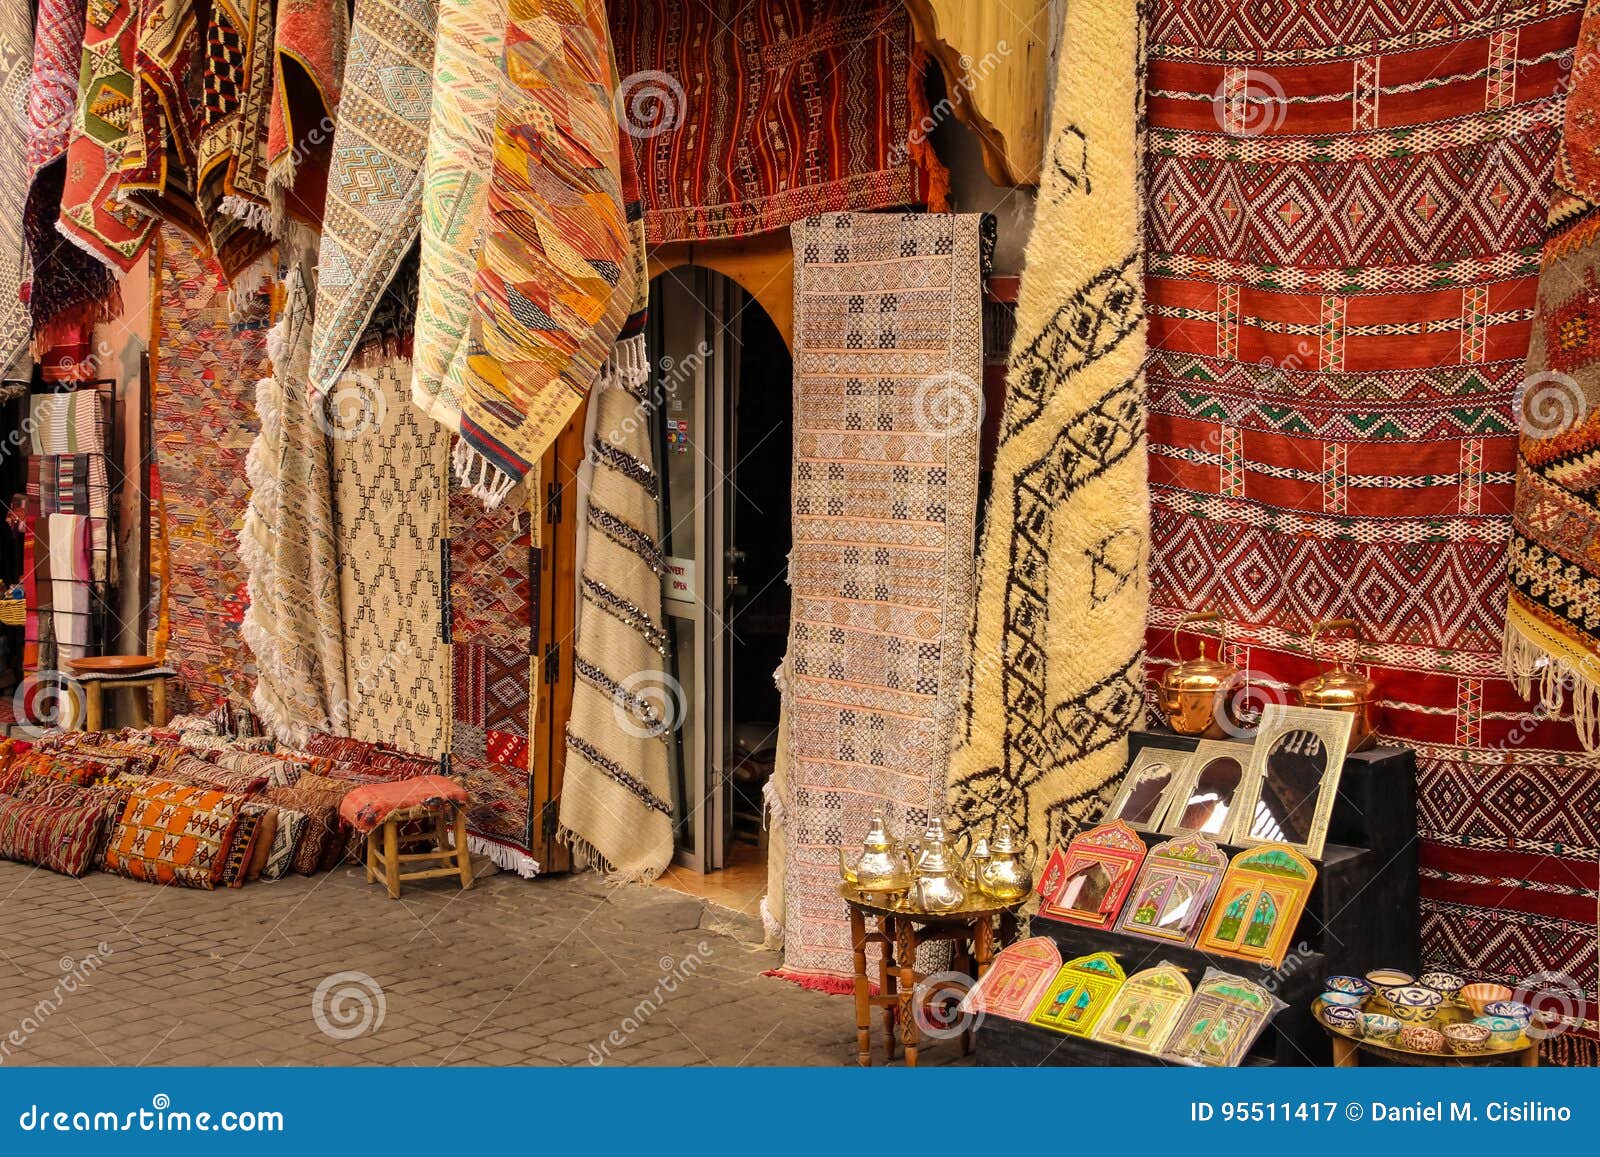 handmade rugs. marrakesh. morocco